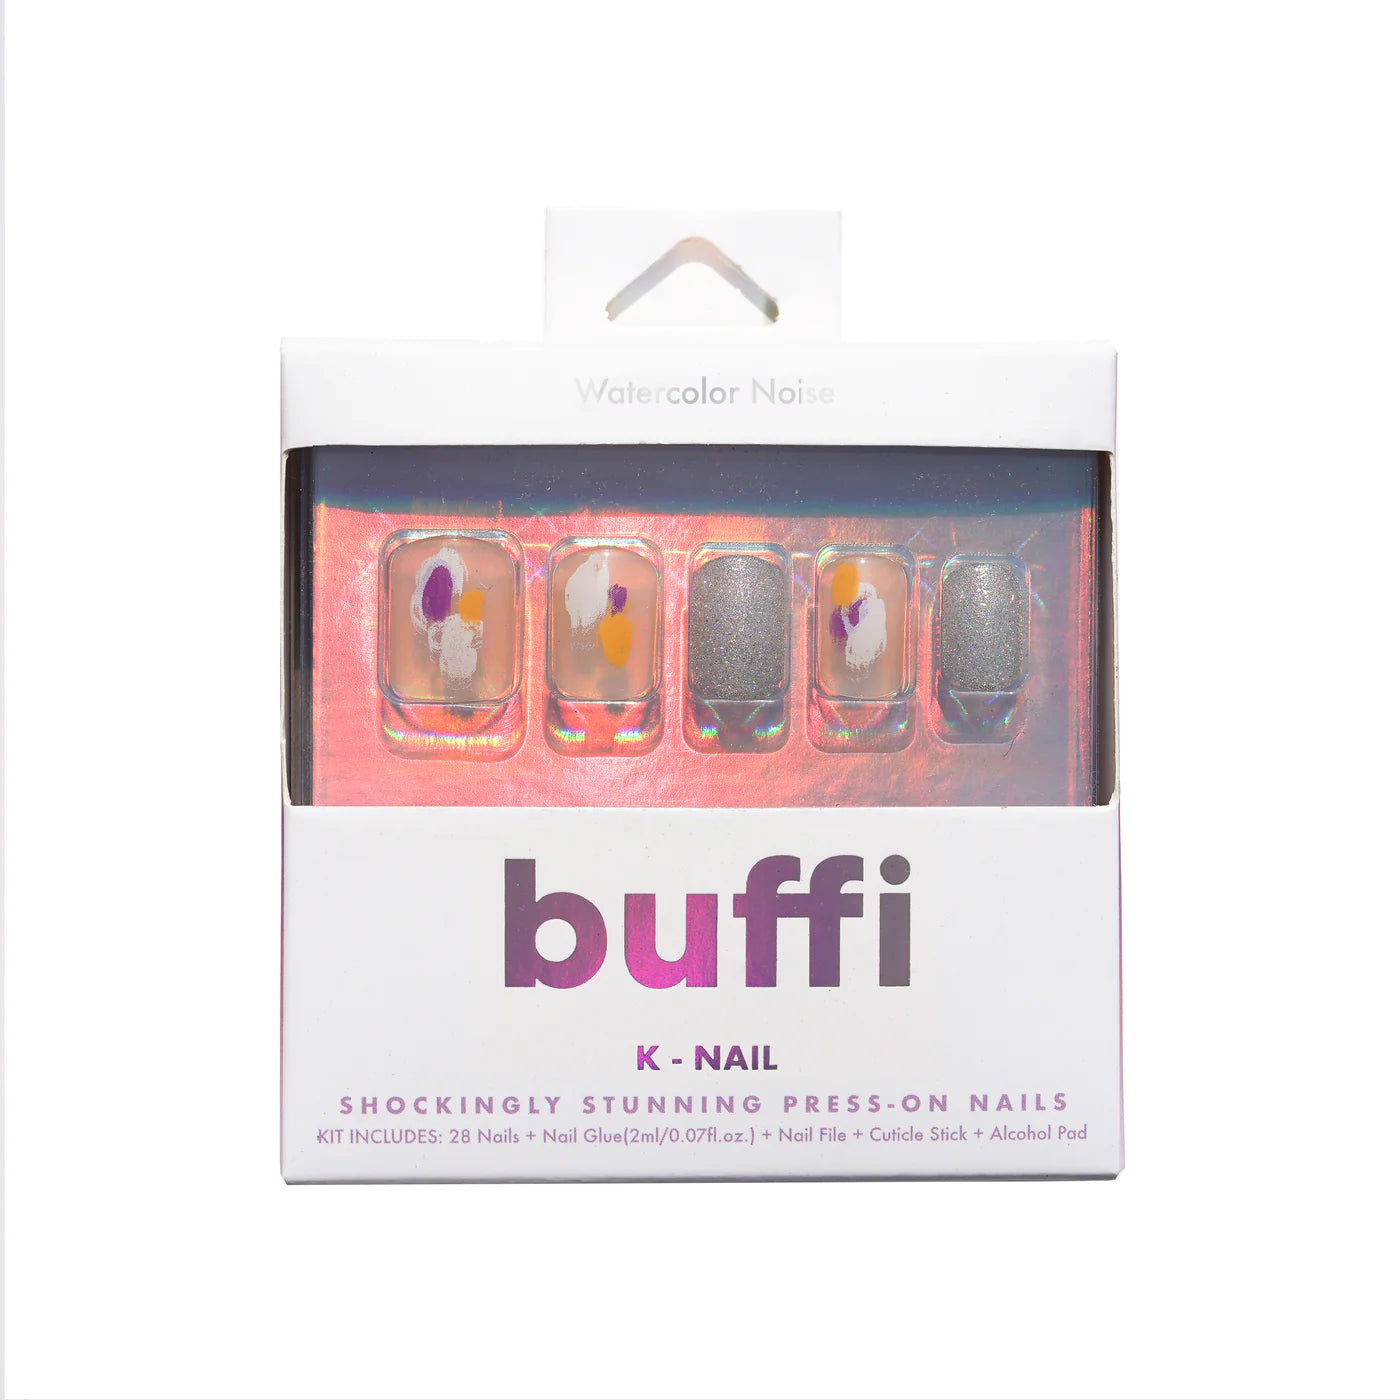 Kara Beauty - Buffi Press On Nails Watercolor Noise